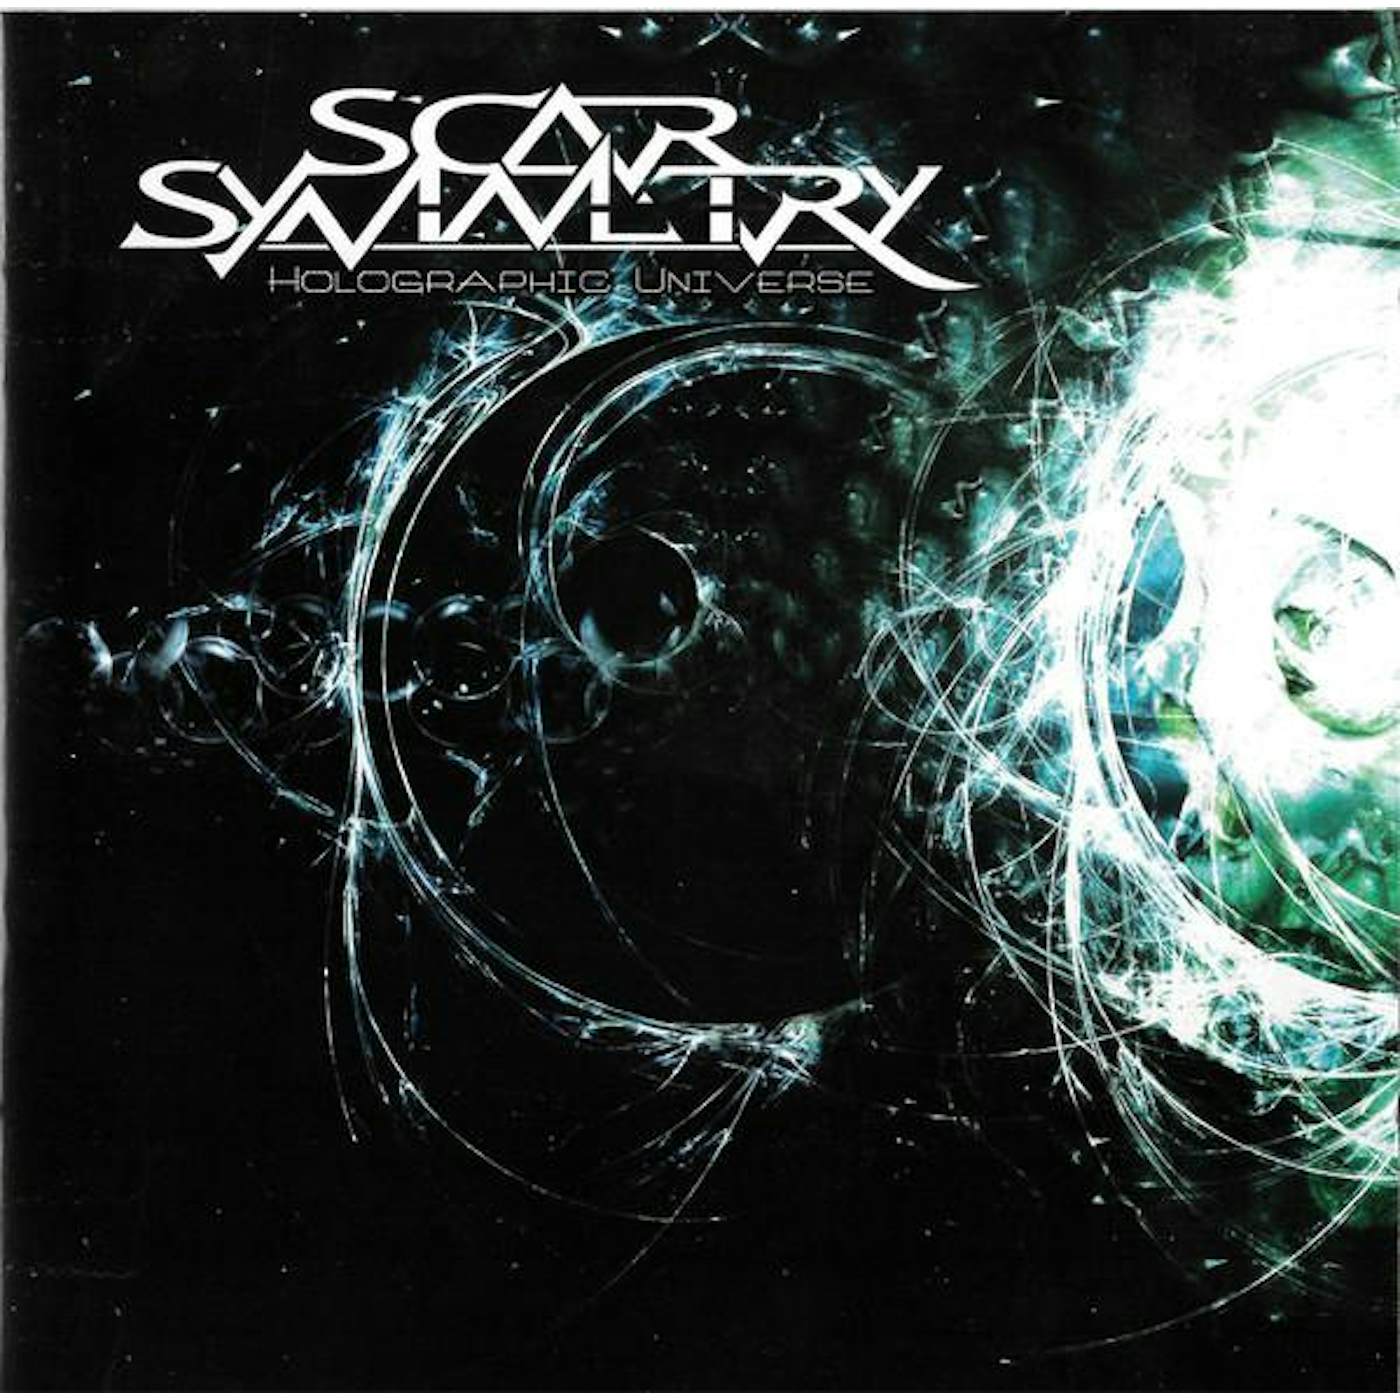 Scar Symmetry HOLOGRAPHIC UNIVERSE CD